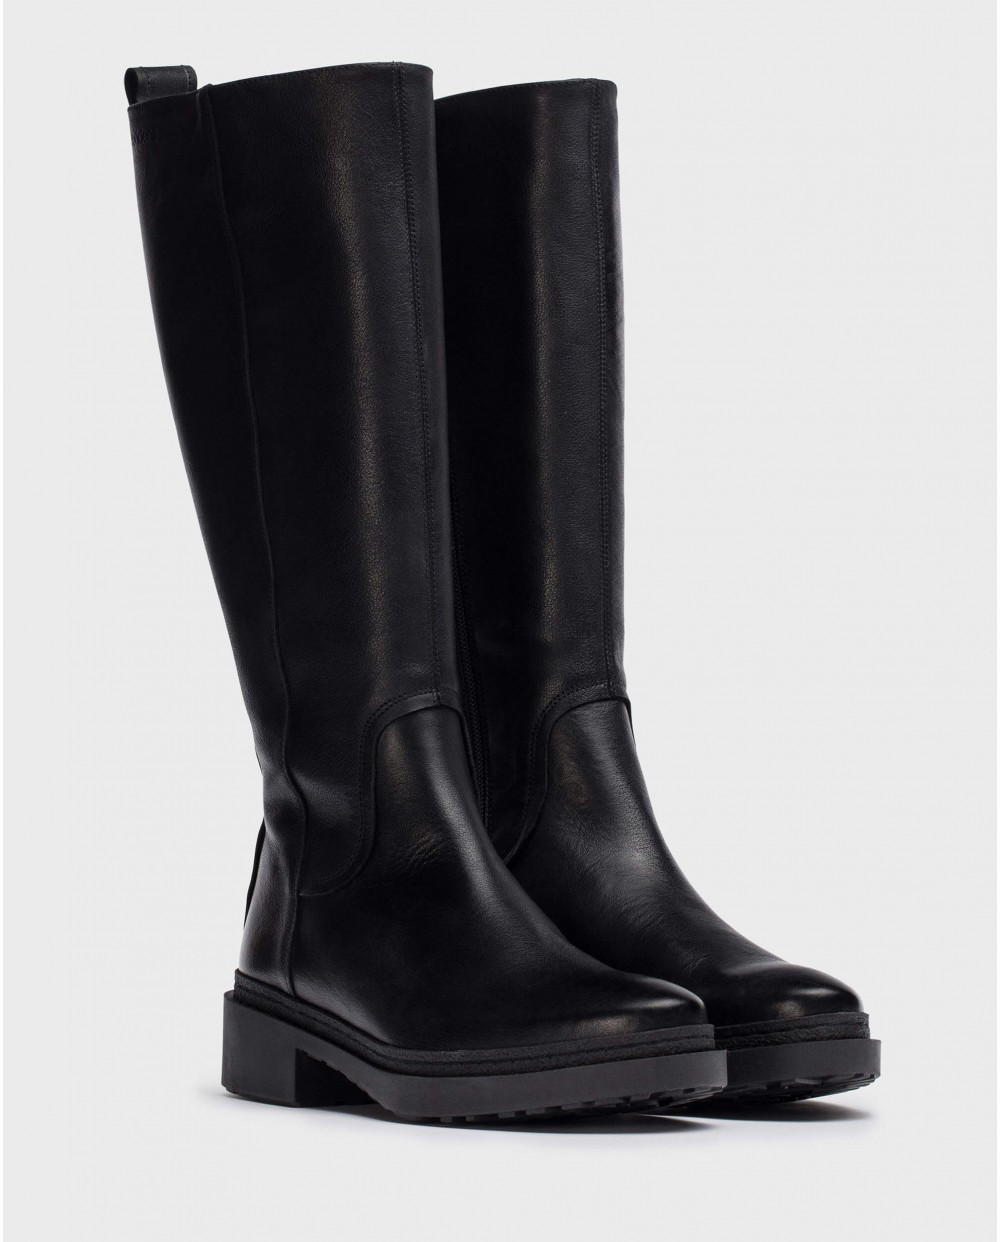 Wonders-Boots-Black ROCO boot